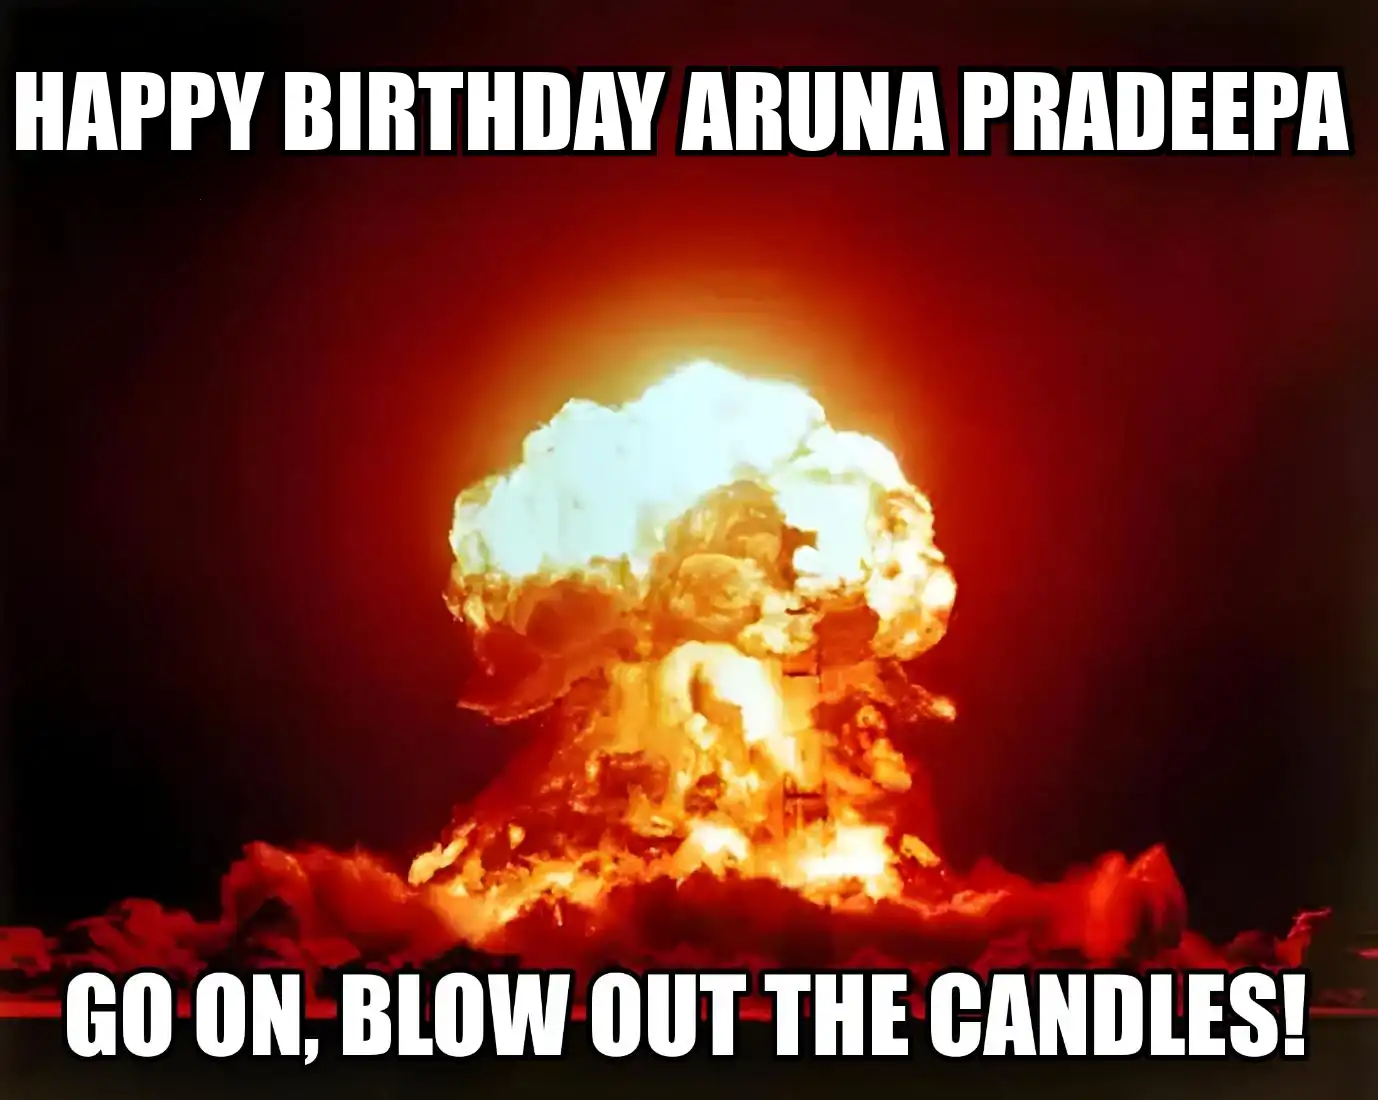 Happy Birthday Aruna pradeepa Go On Blow Out The Candles Meme